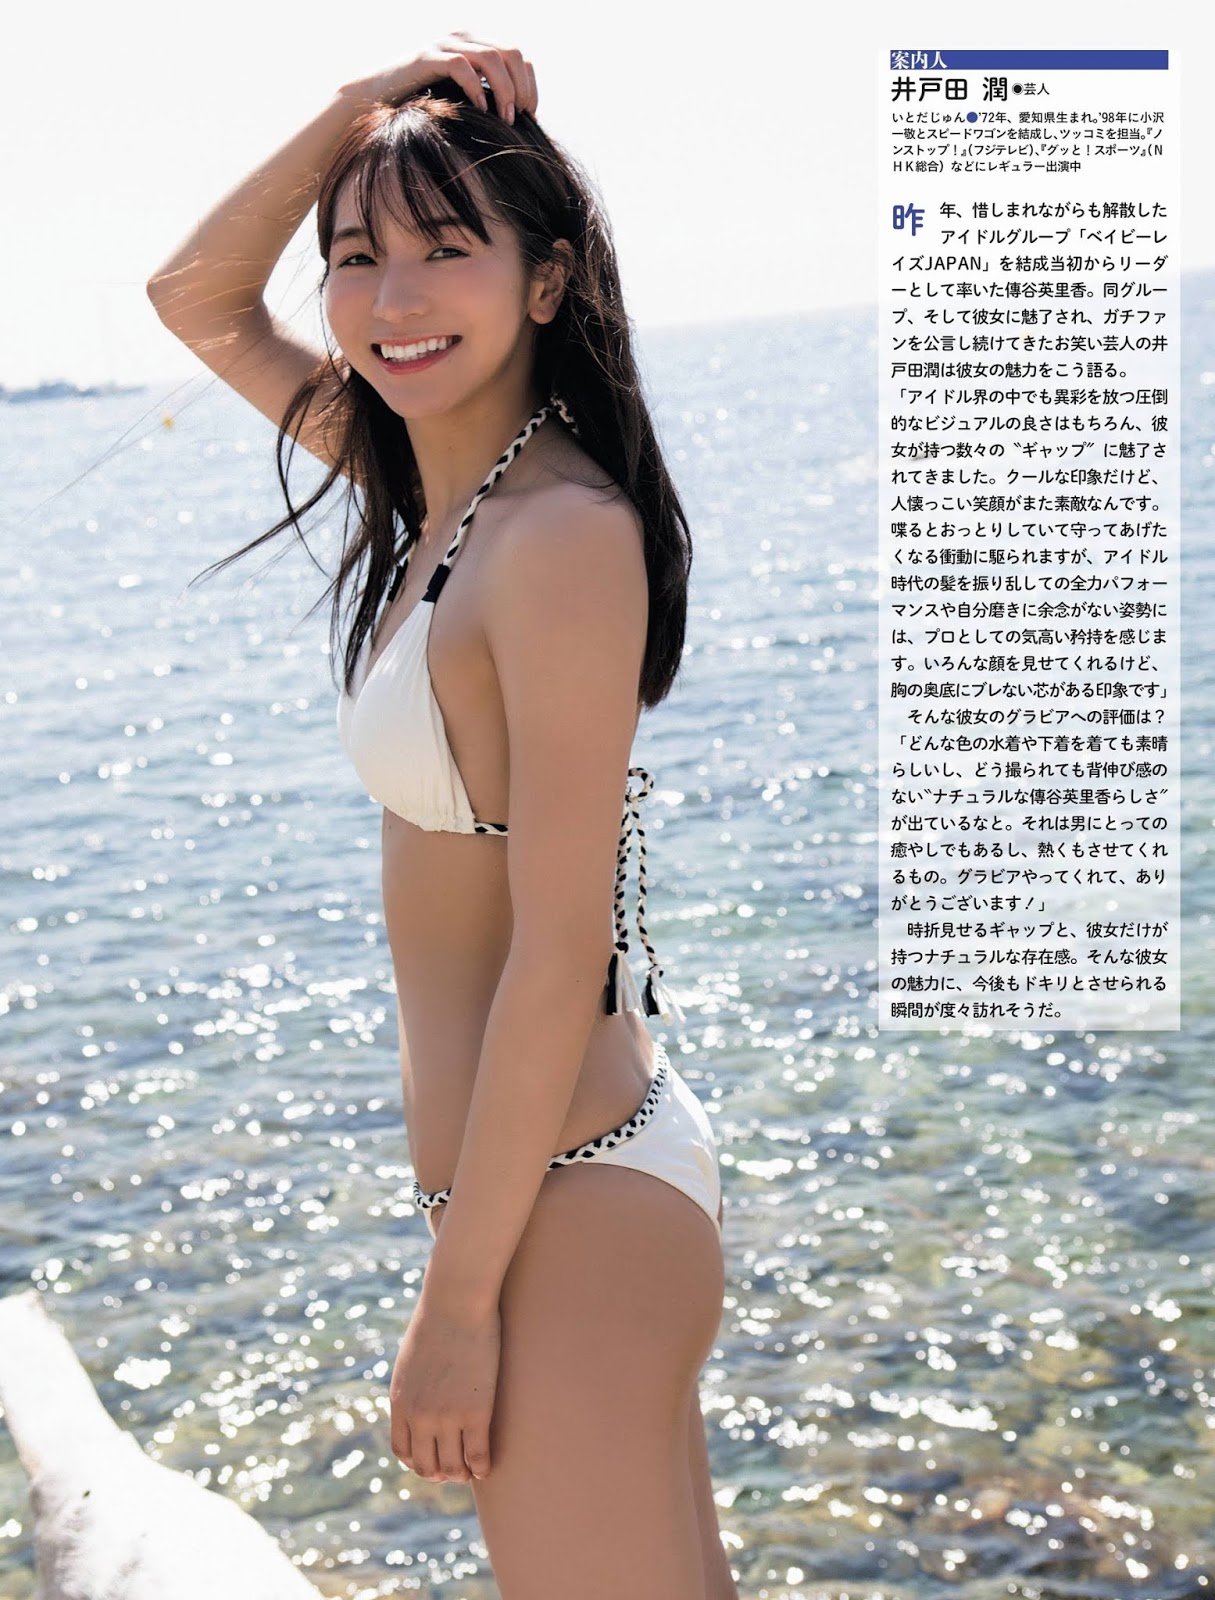 Erika Den’ya 傳谷英里香, Weekly SPA! 2019.10.15-22 (週刊SPA! 2019年10月15-22日号)